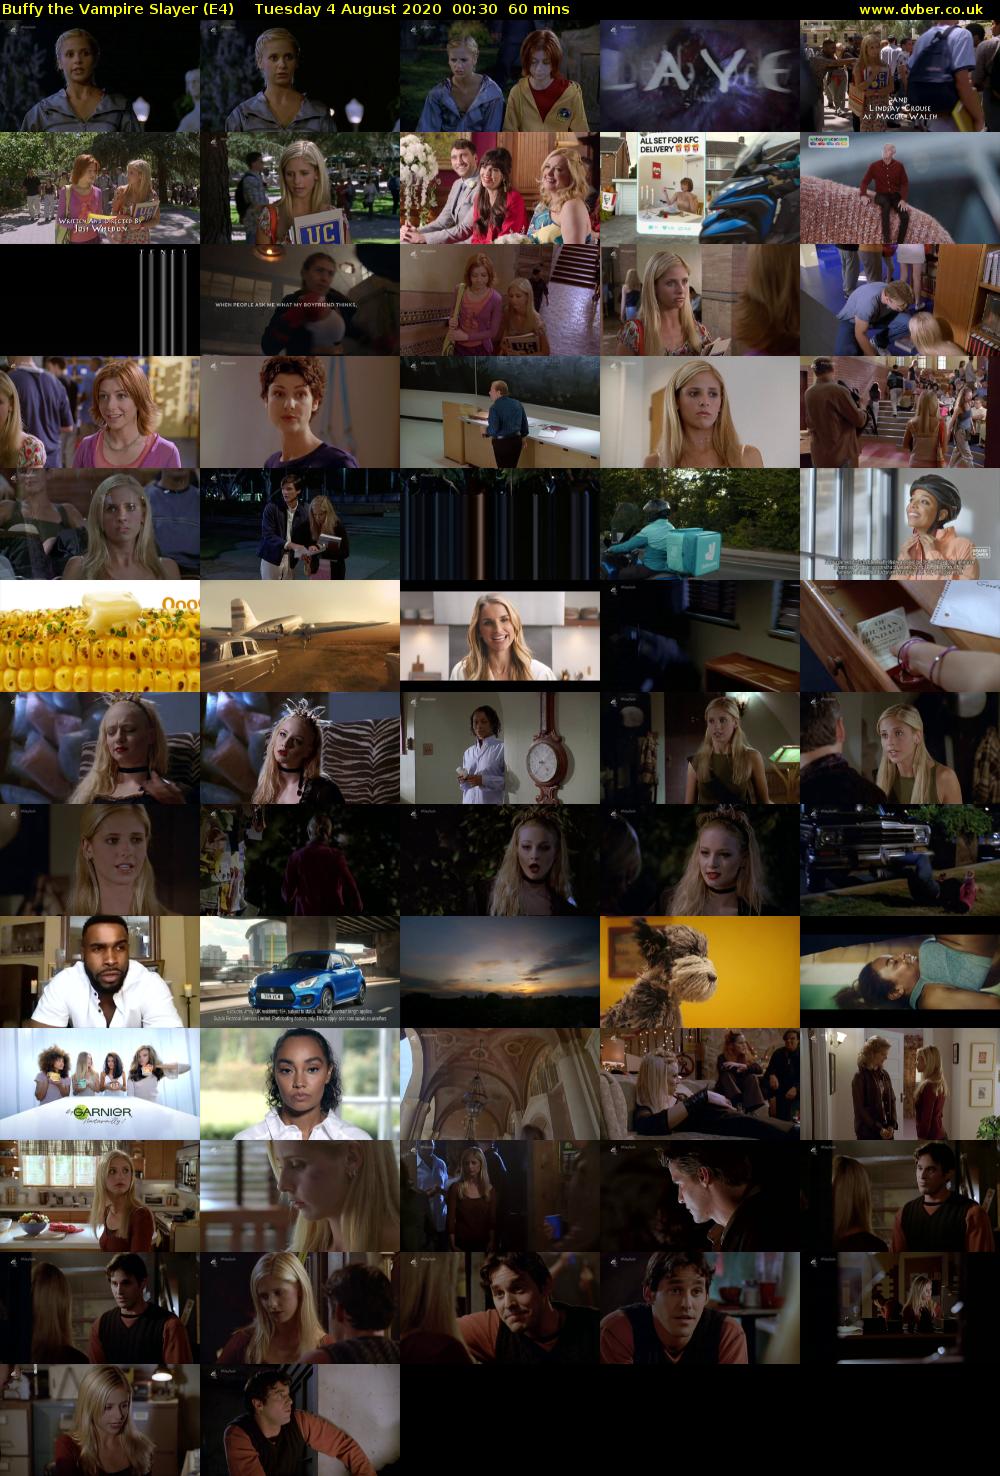 Buffy the Vampire Slayer (E4) Tuesday 4 August 2020 00:30 - 01:30